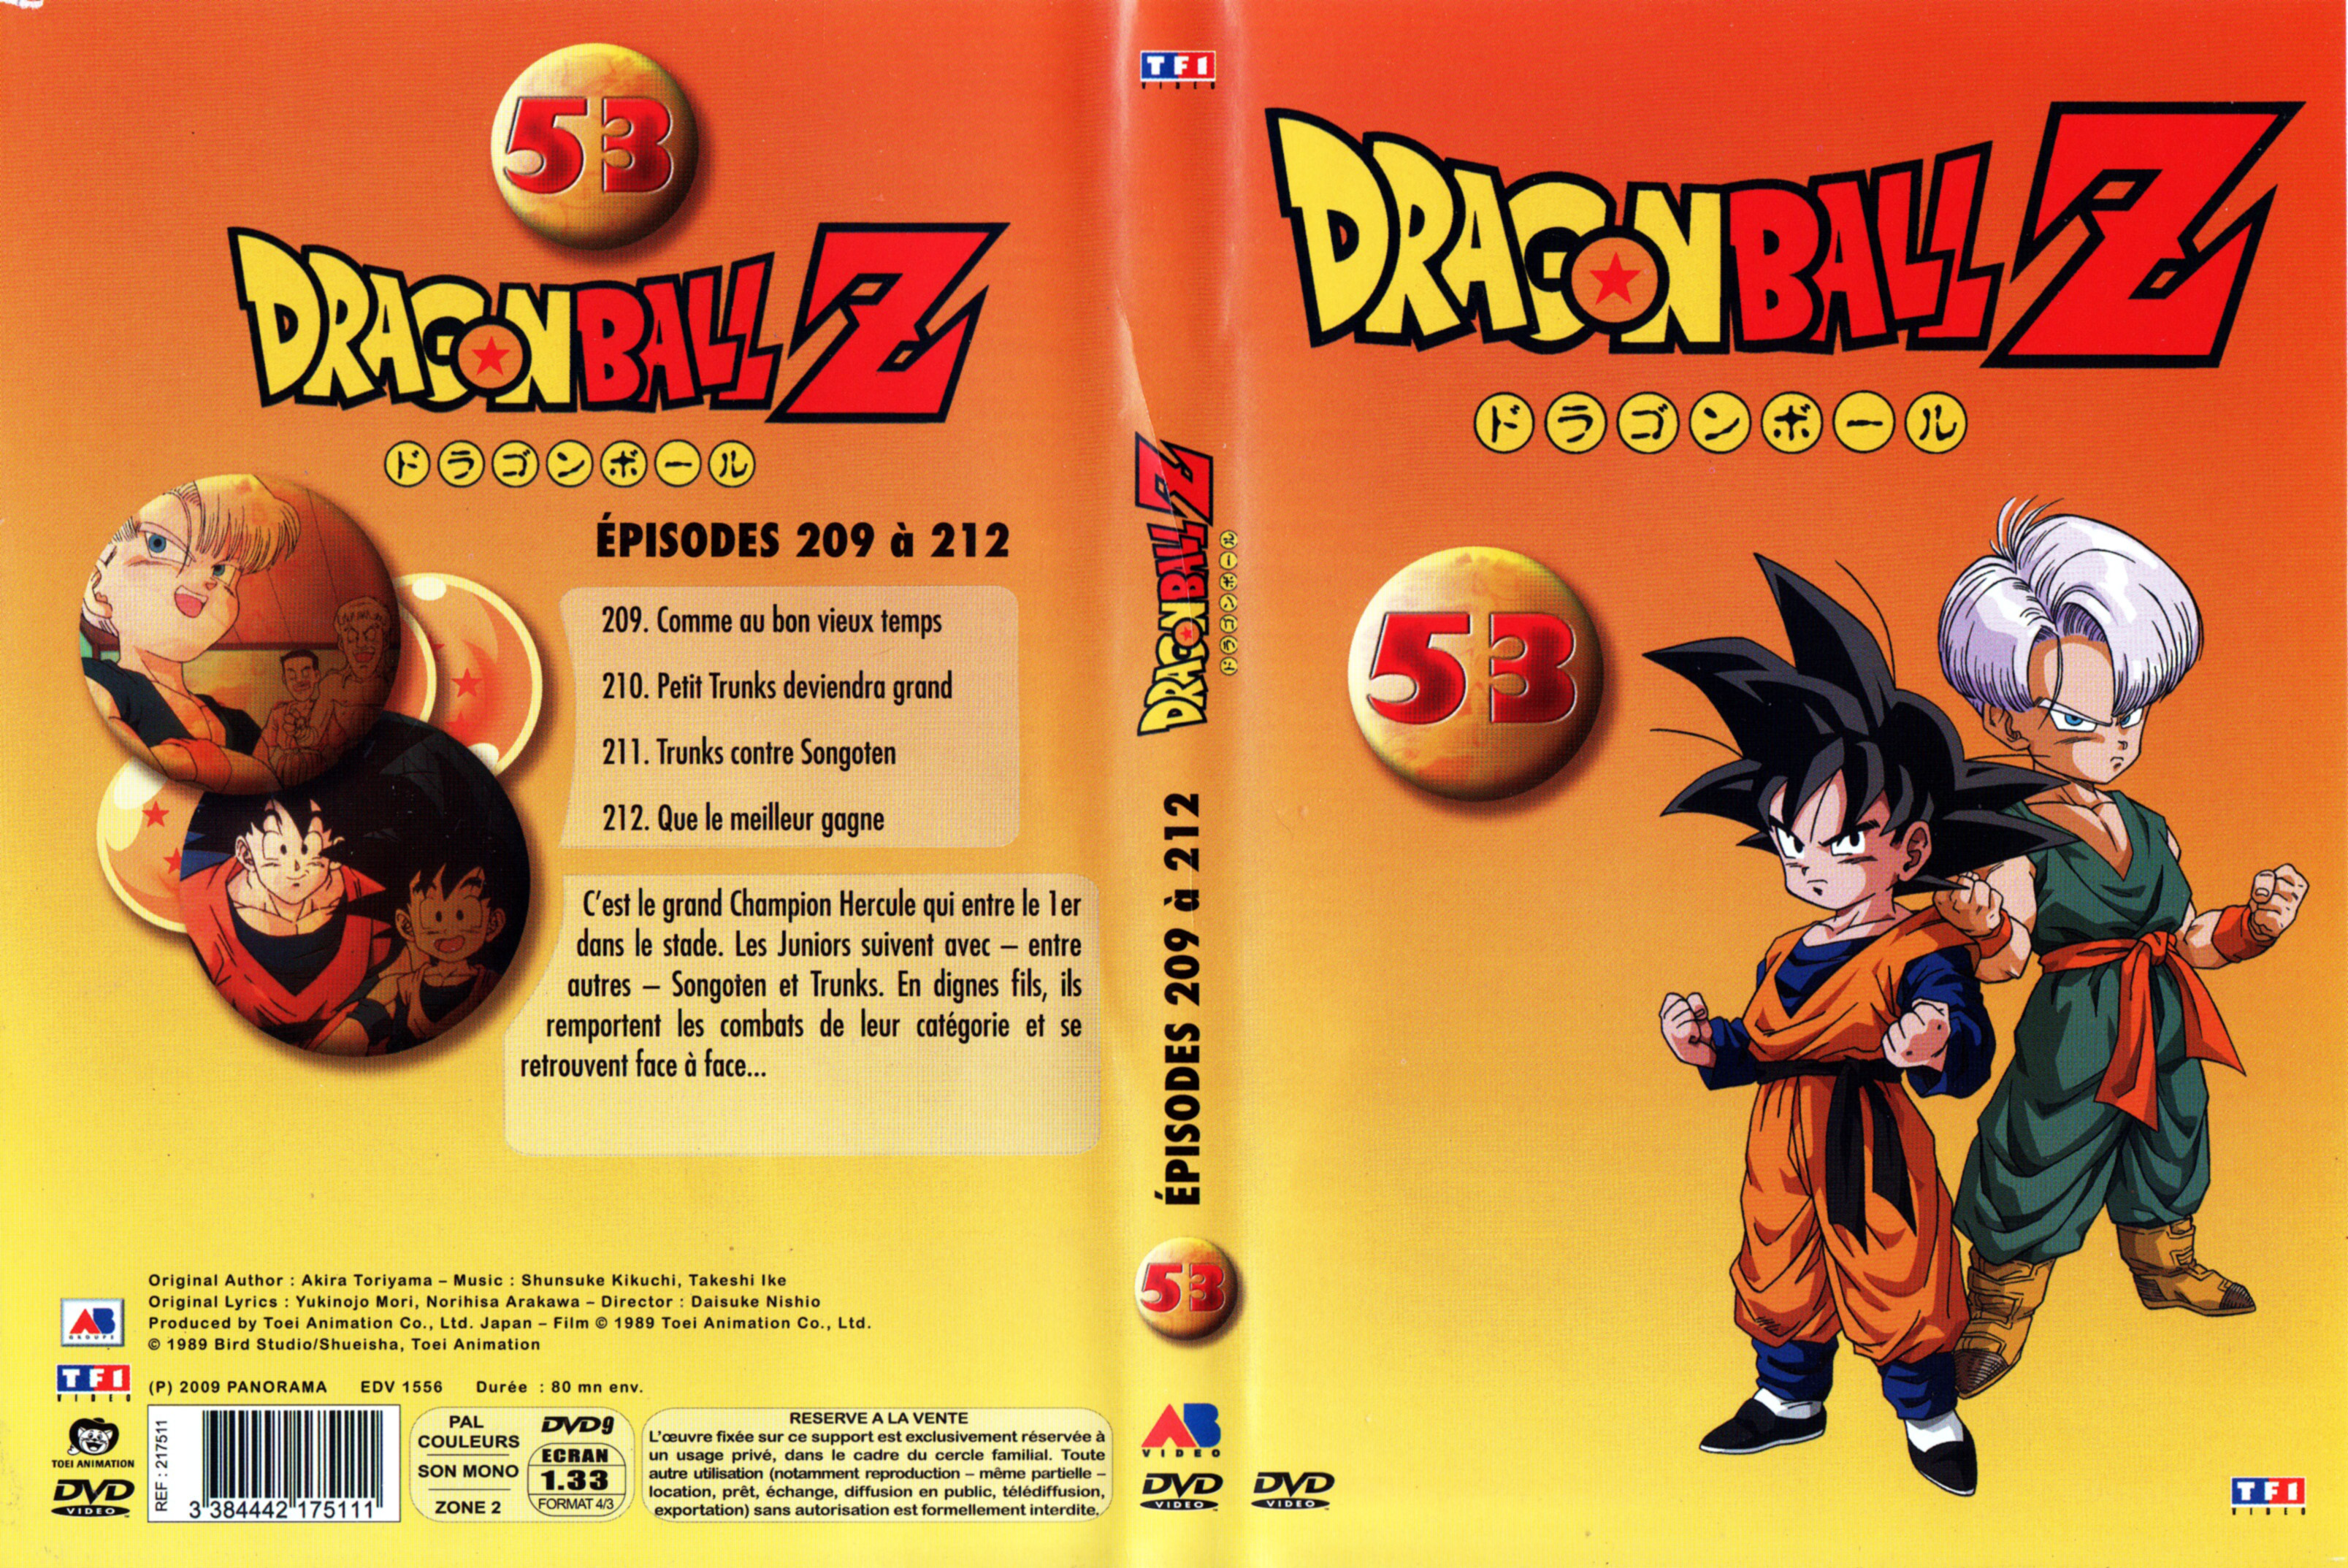 Jaquette DVD Dragon Ball Z vol 53